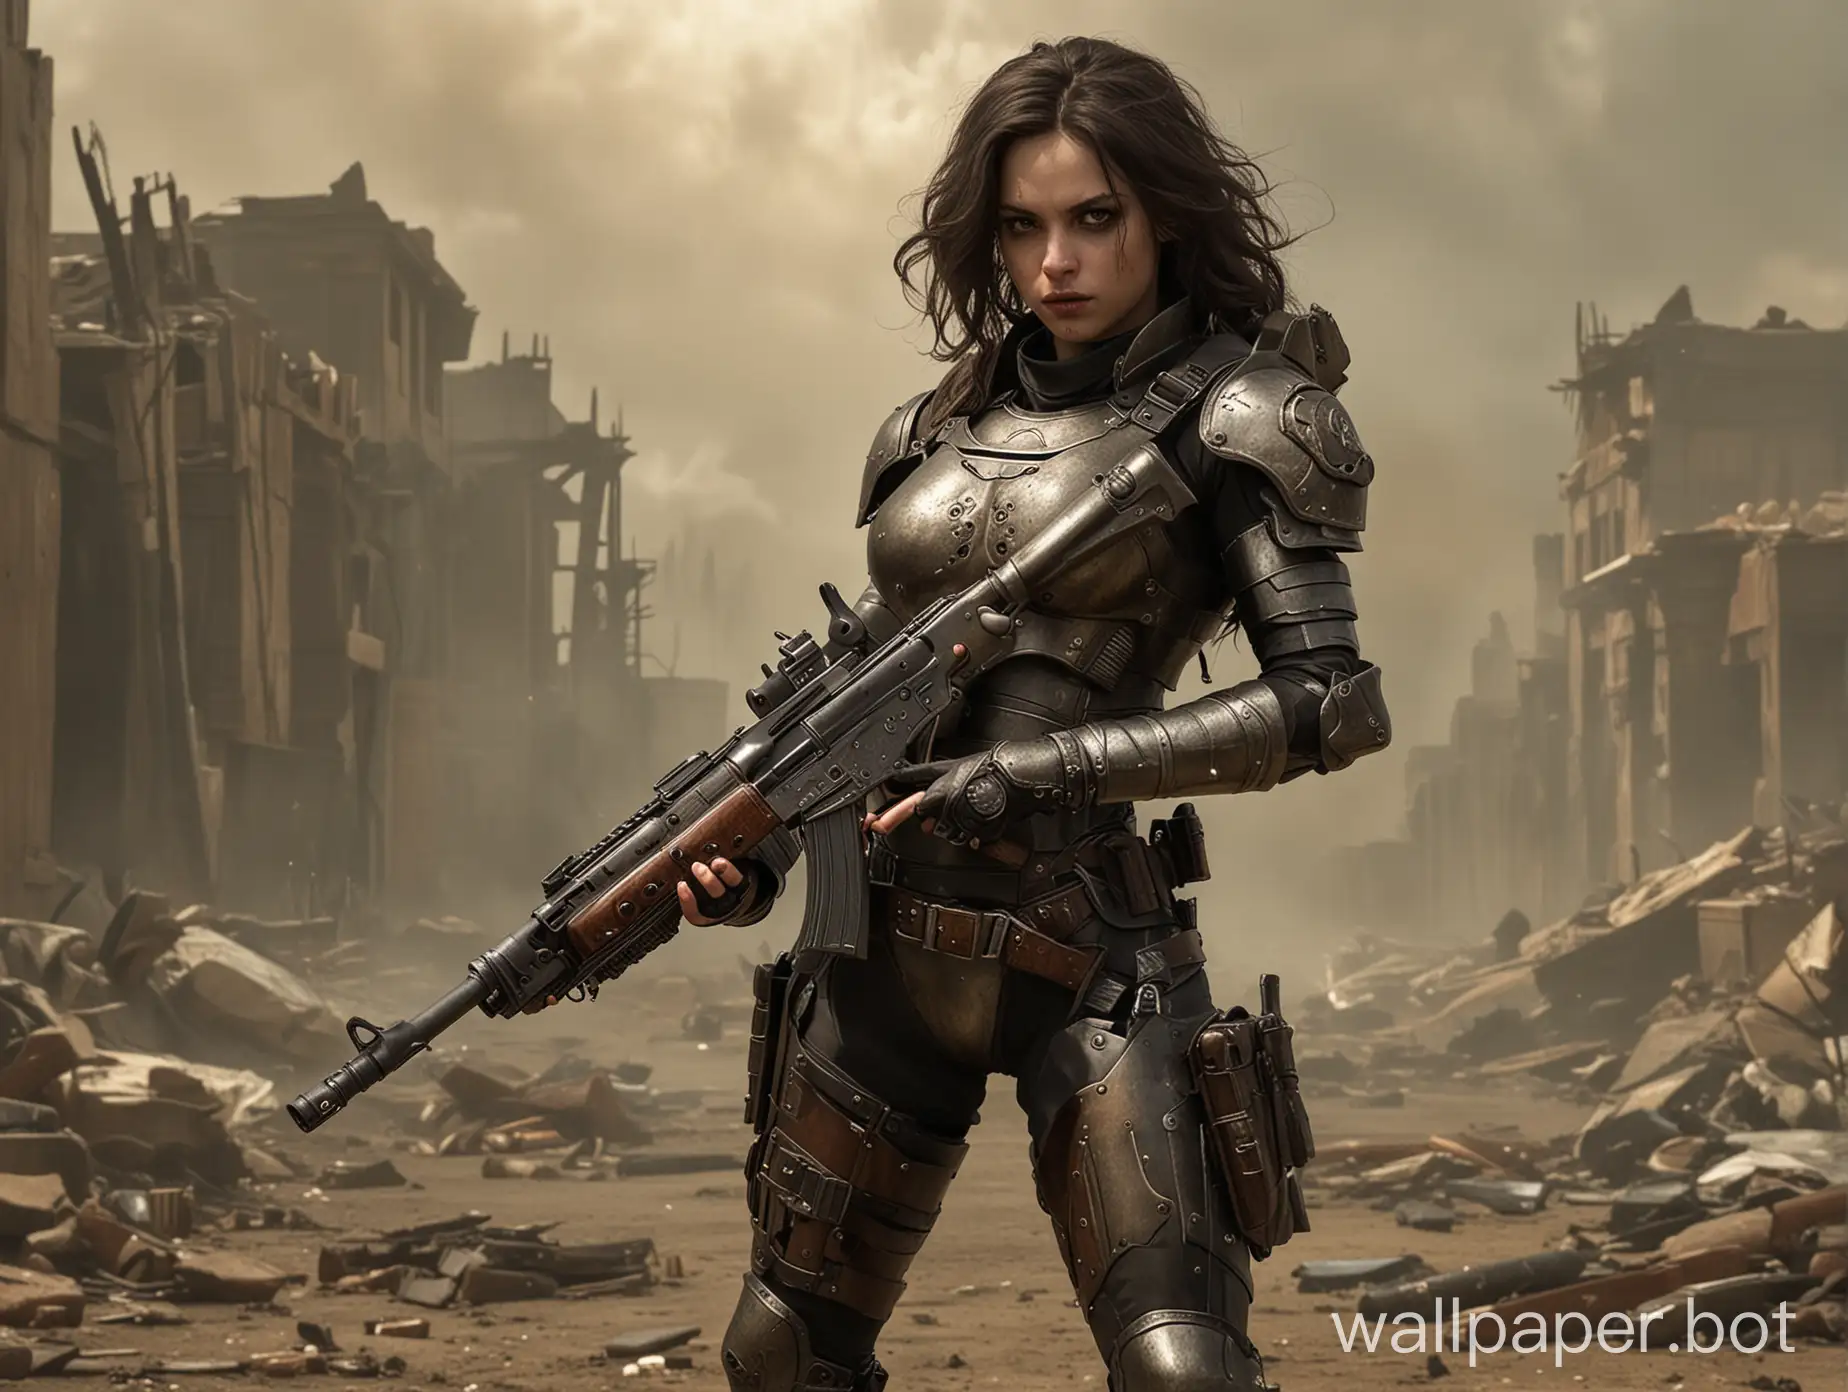 doomgirl with shotgun in right hand. in full armor.